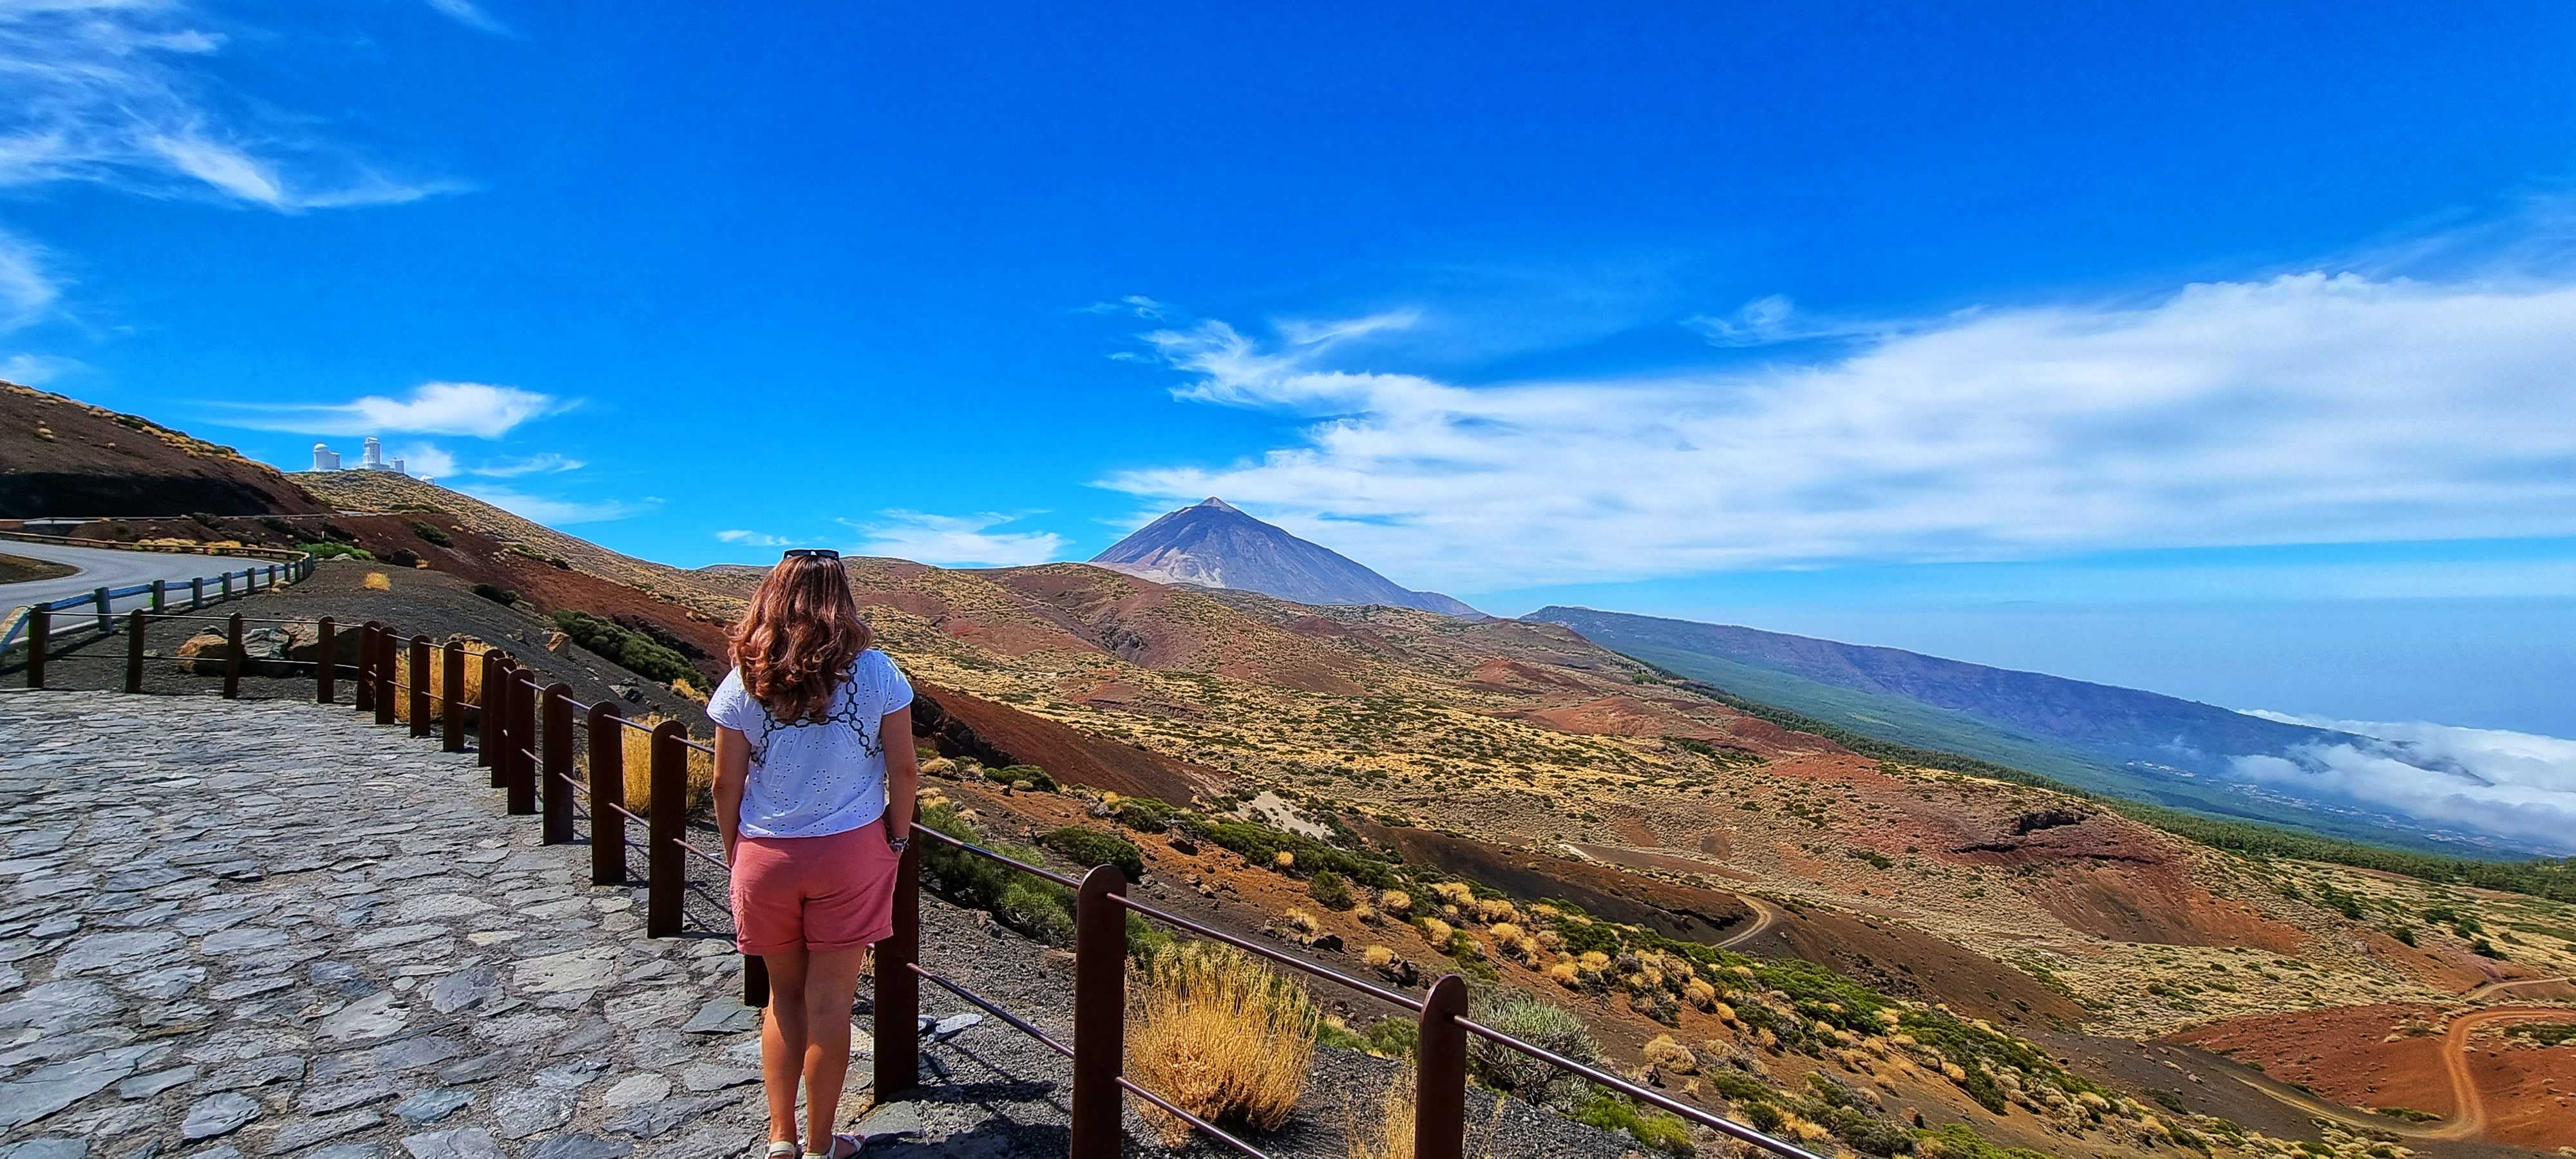 North of Tenerife - Part 2